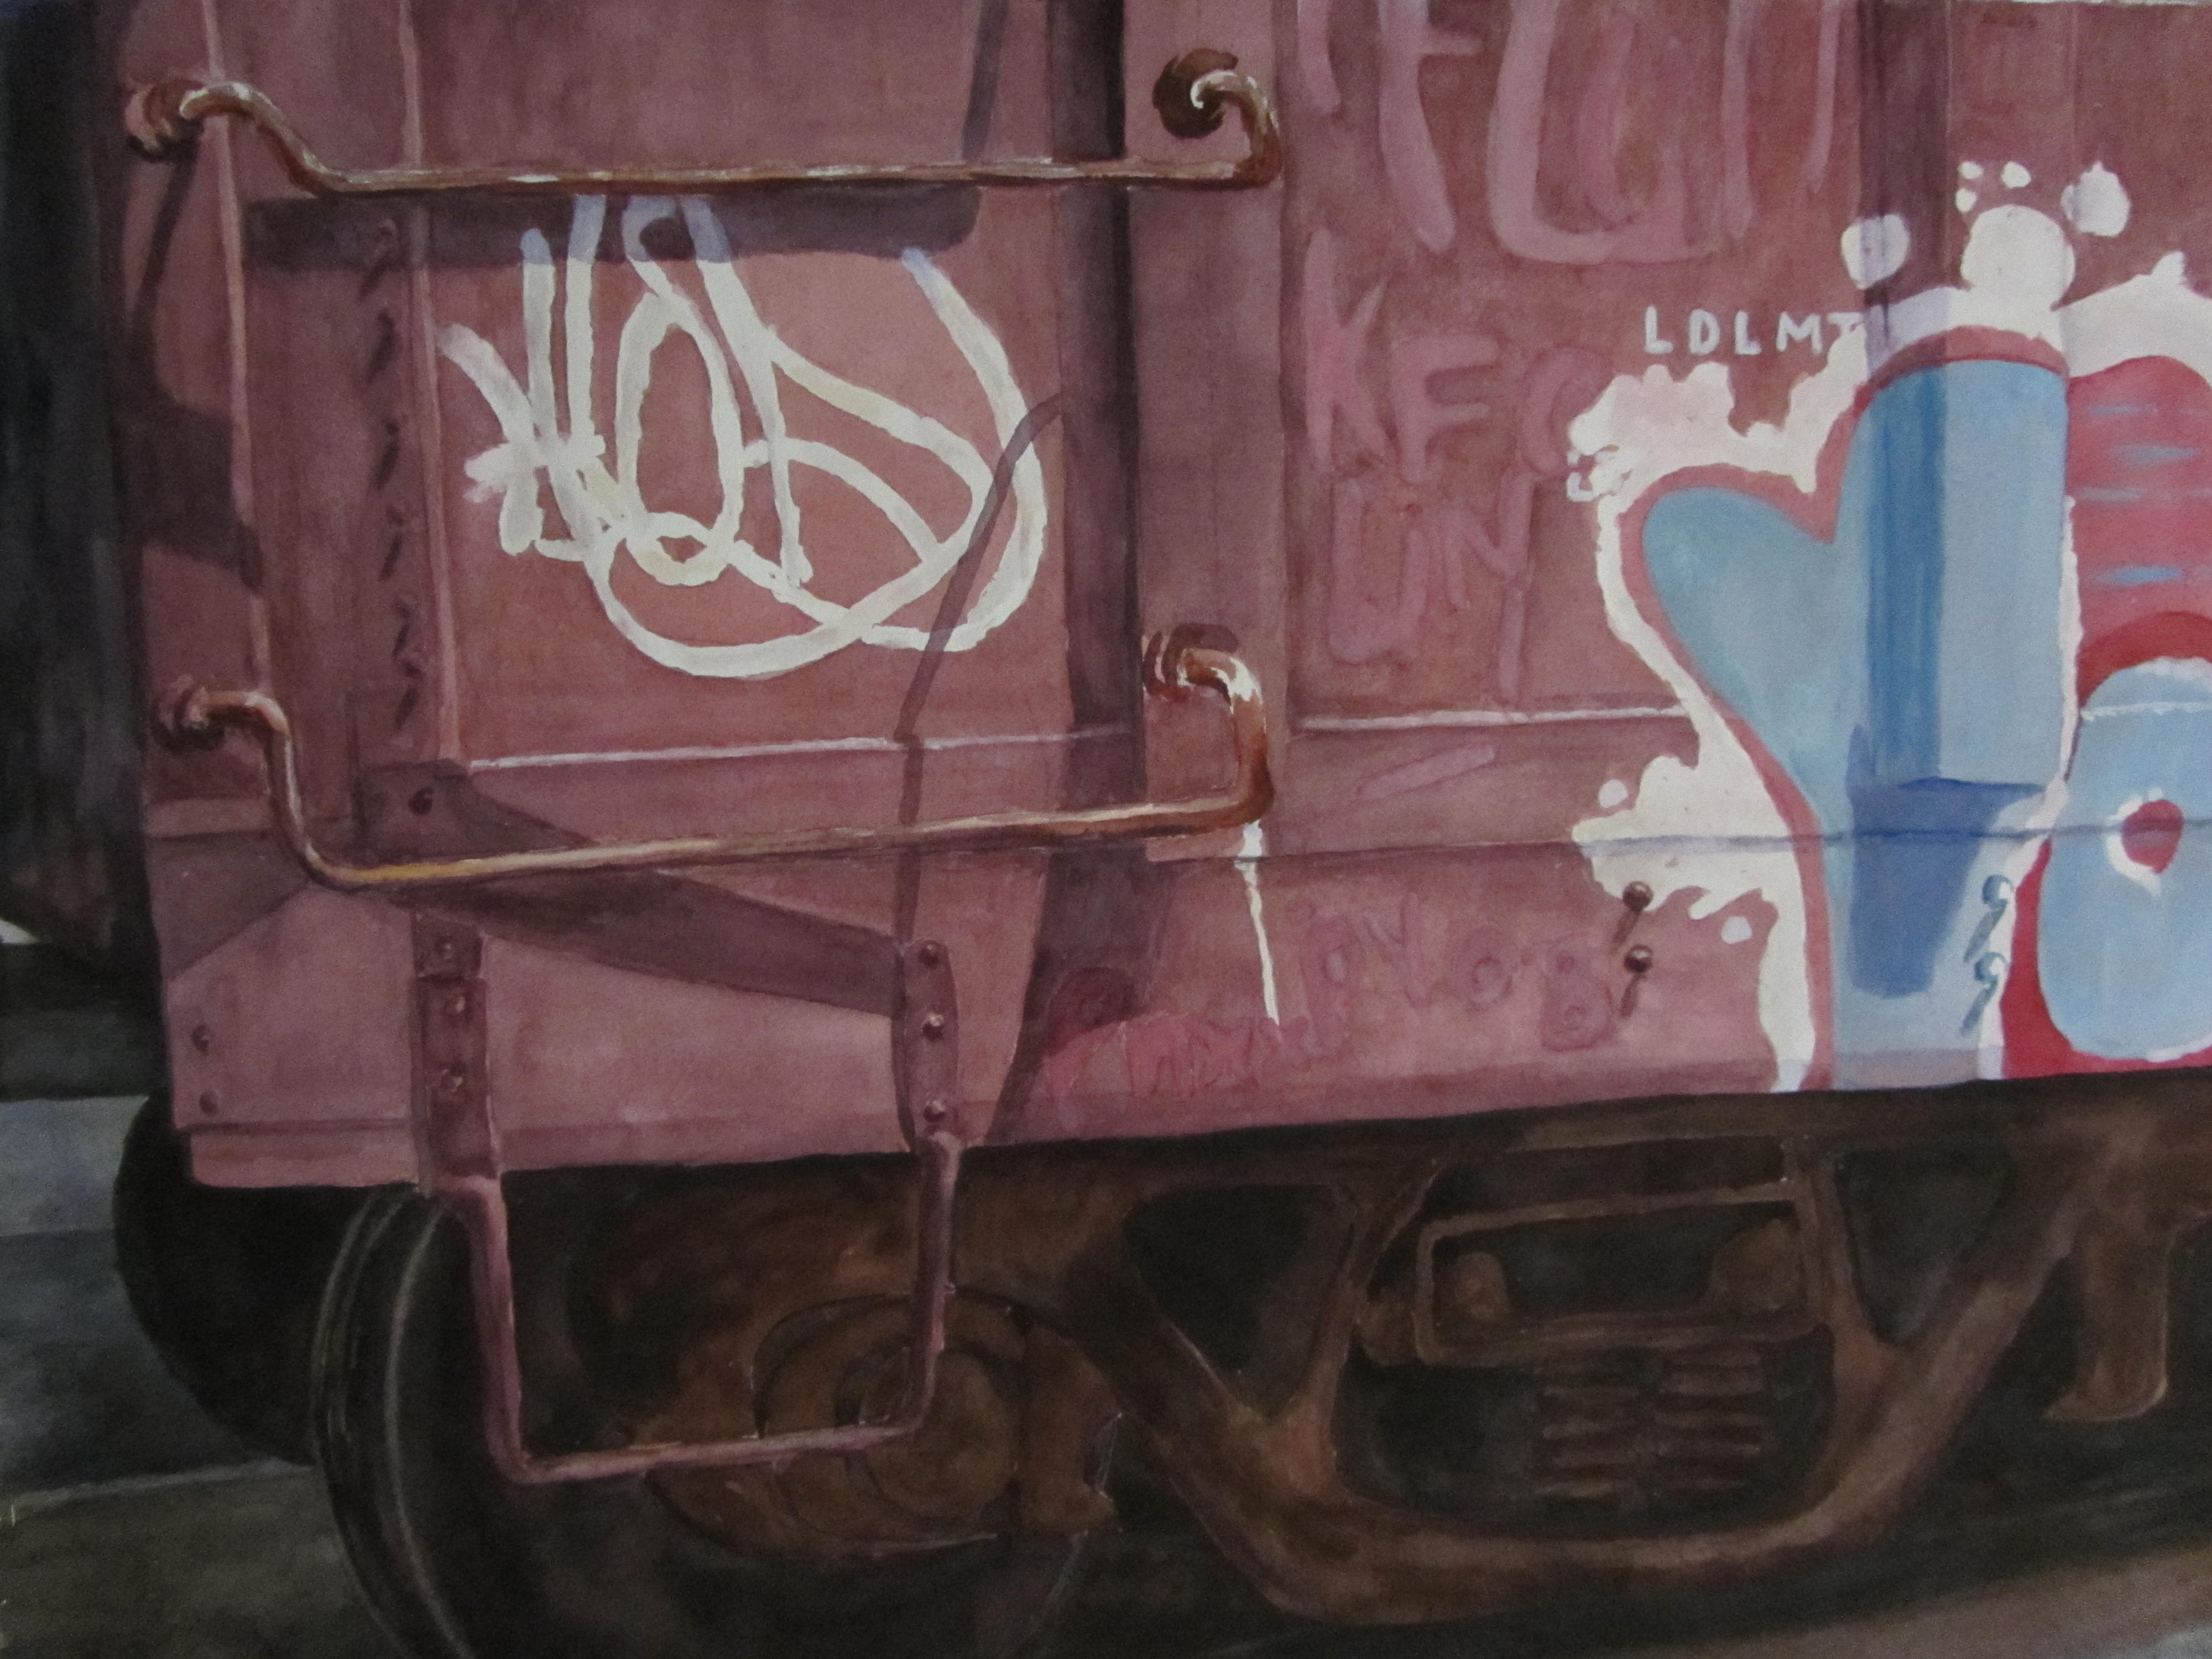 Pink boxcar